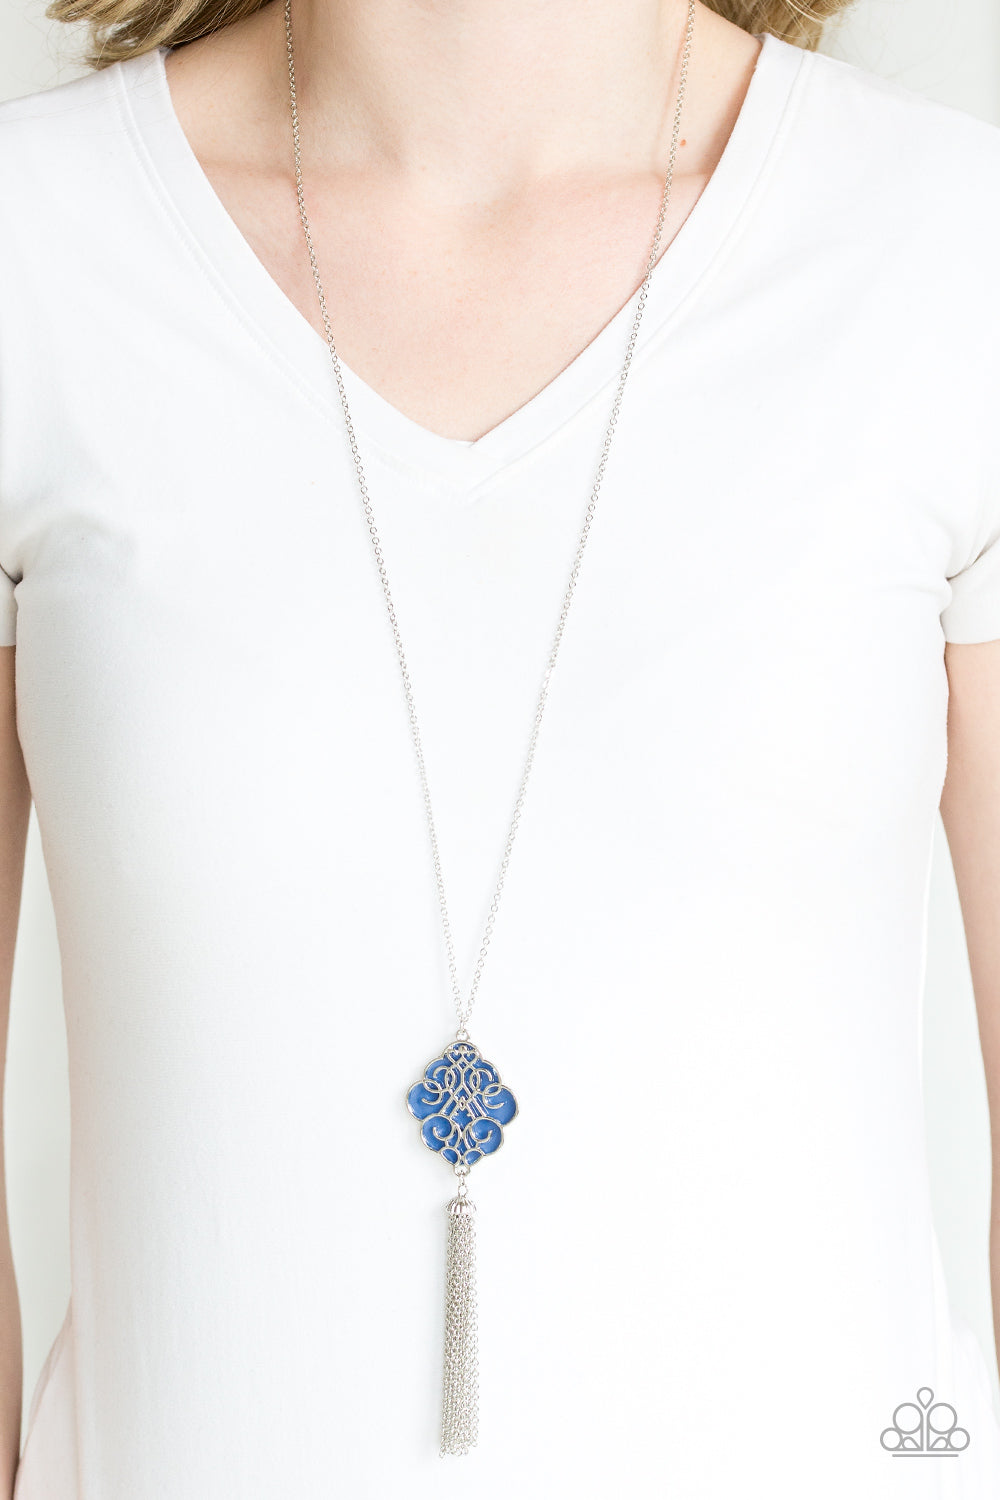 Paparazzi Accessories - Malibu Mandala - Blue & Silver Necklace